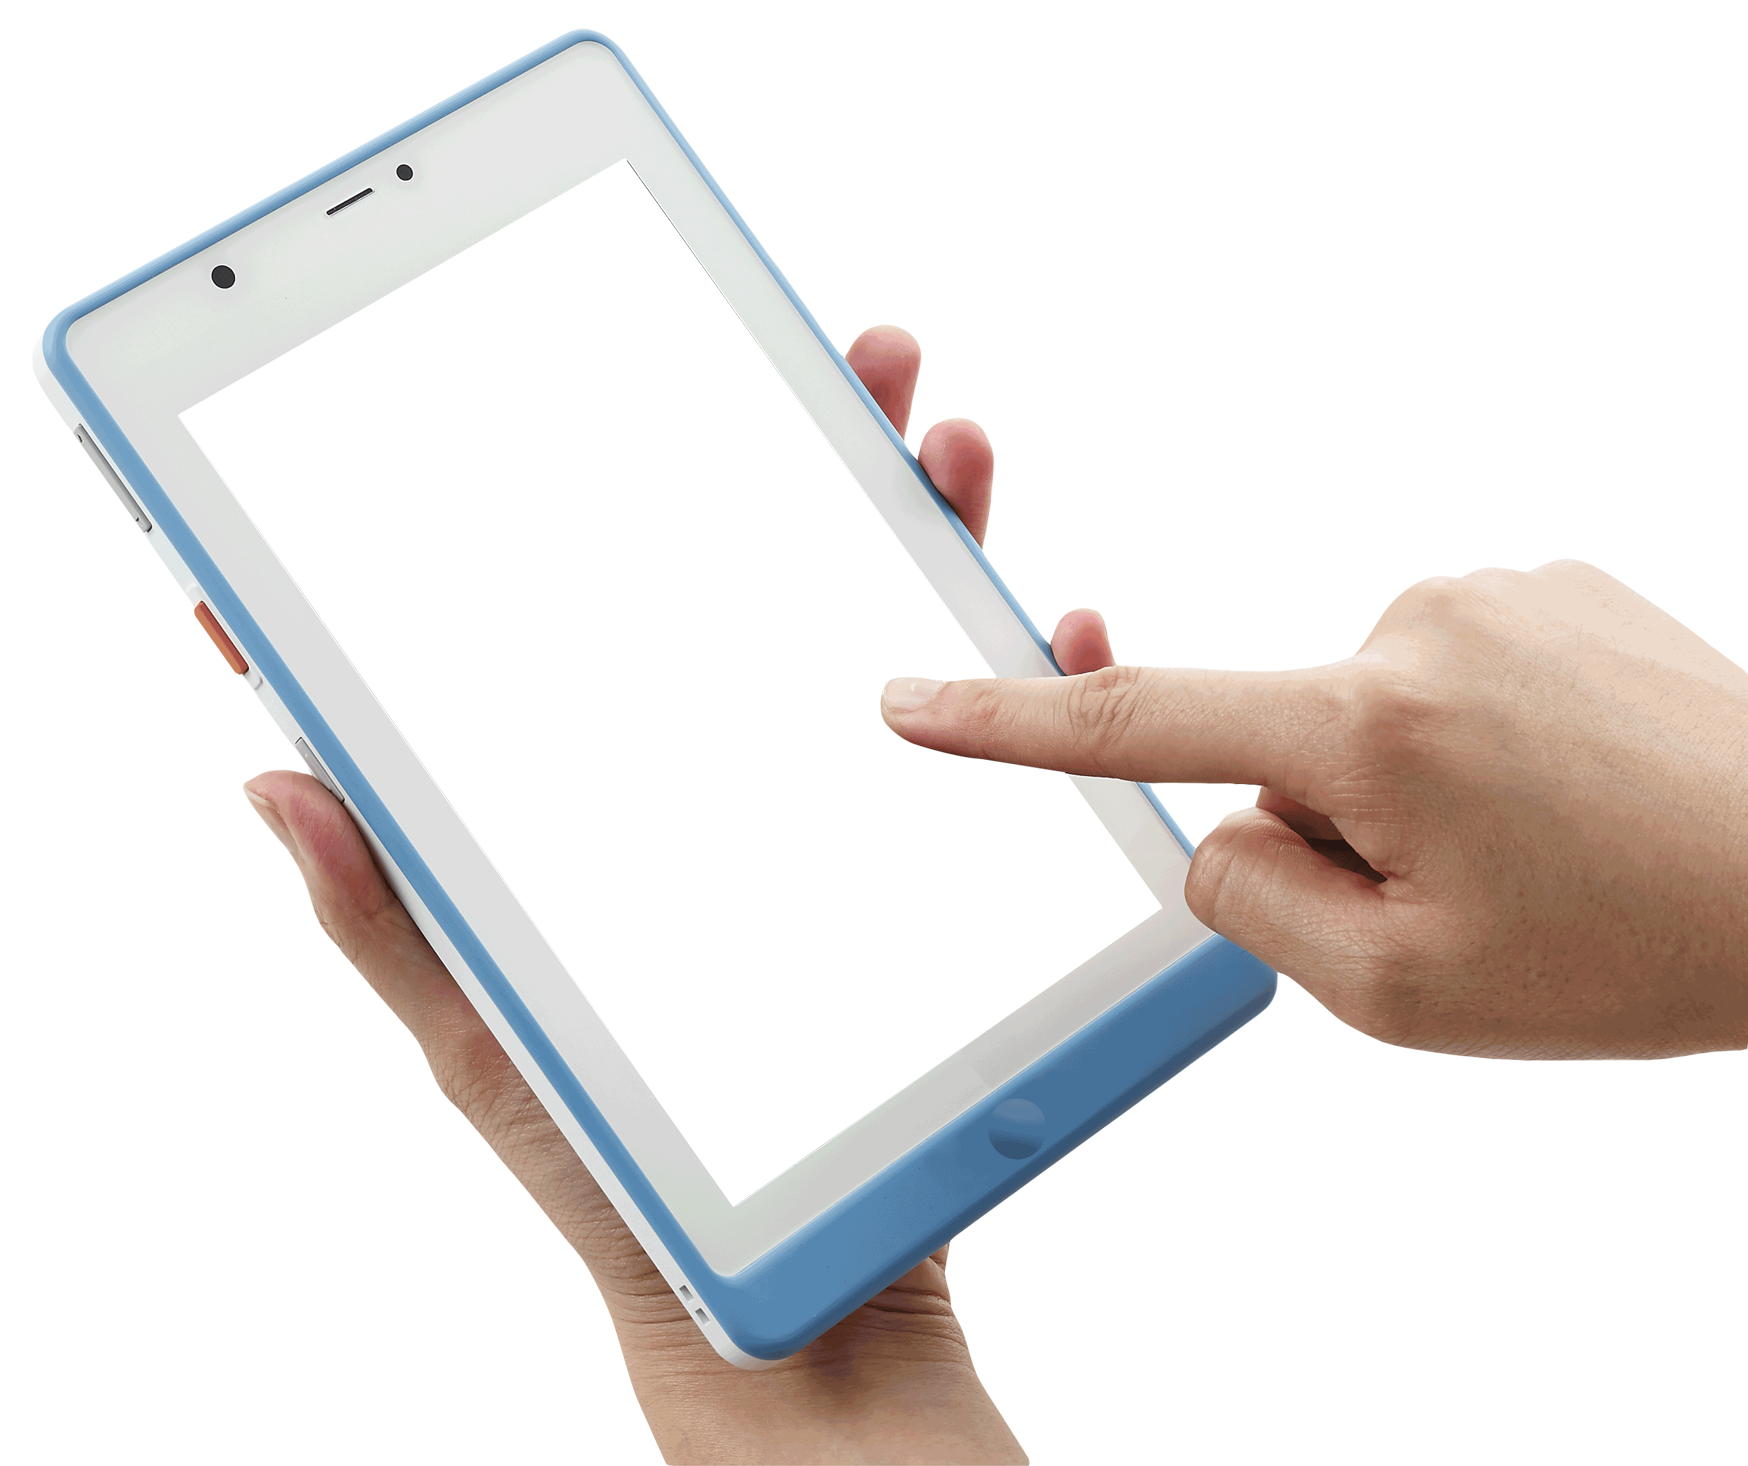 Hand Tablet Holding Mockup PNG Image High Quality PNG Image